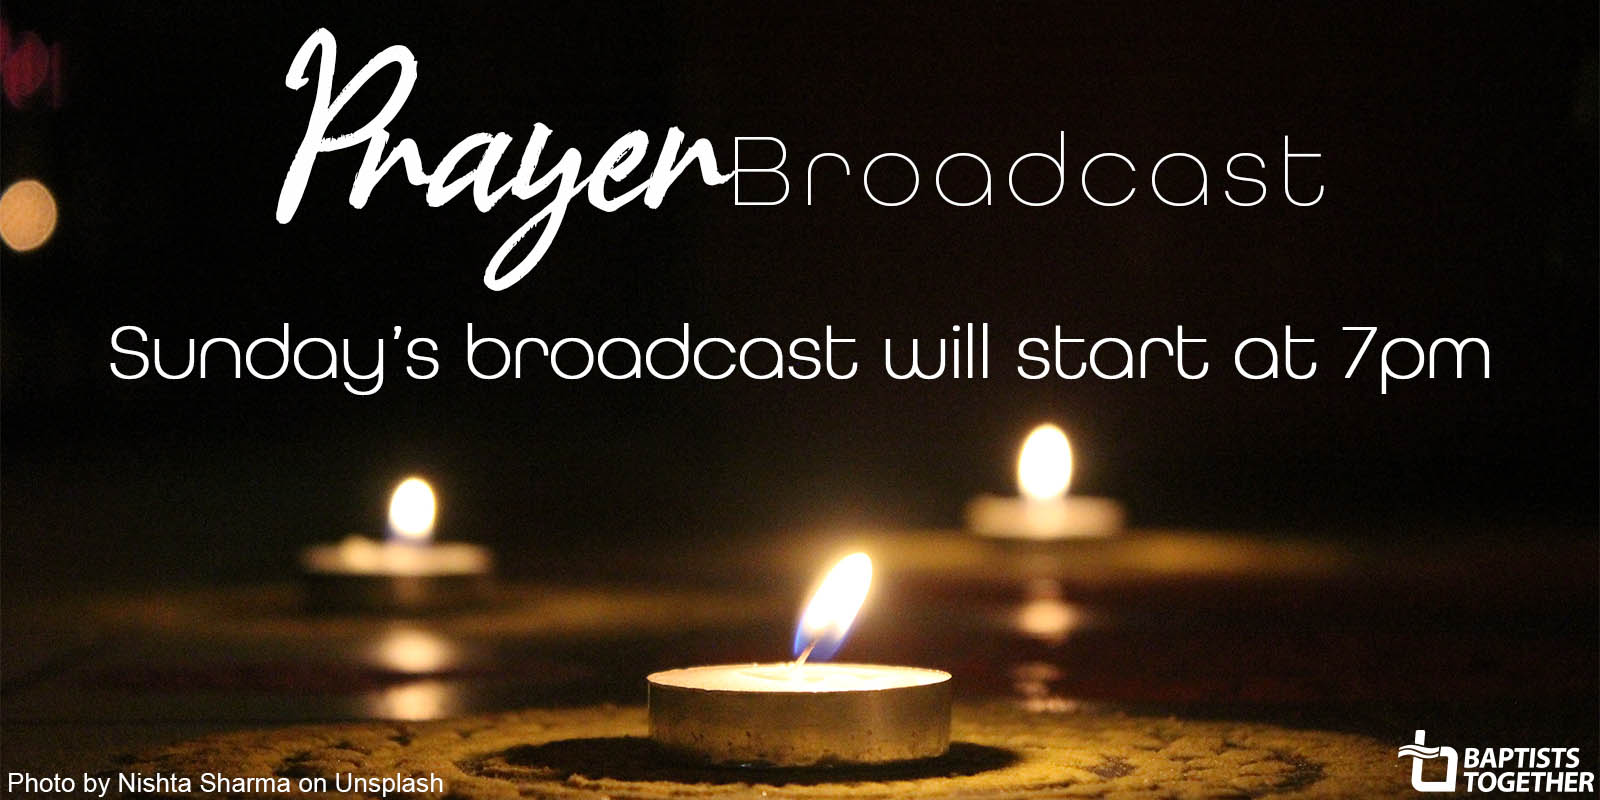 Prayer Broadcast: Sunday 28 June 2020